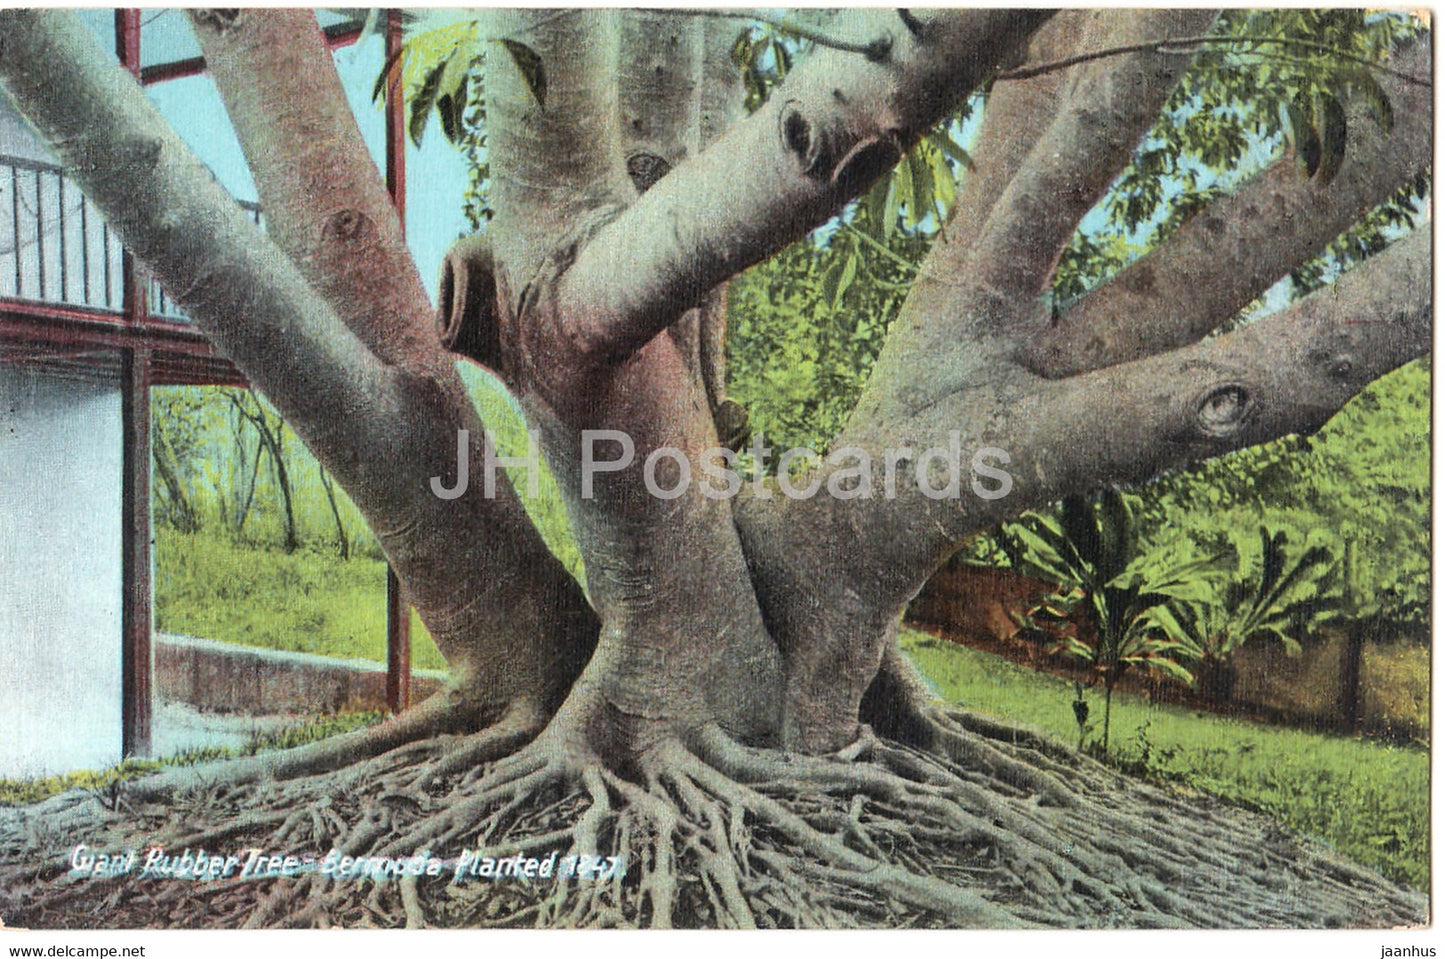 Giant Rubber Tree - Bermuda - Planted 1847 - old postcard - Bermuda - unused - JH Postcards